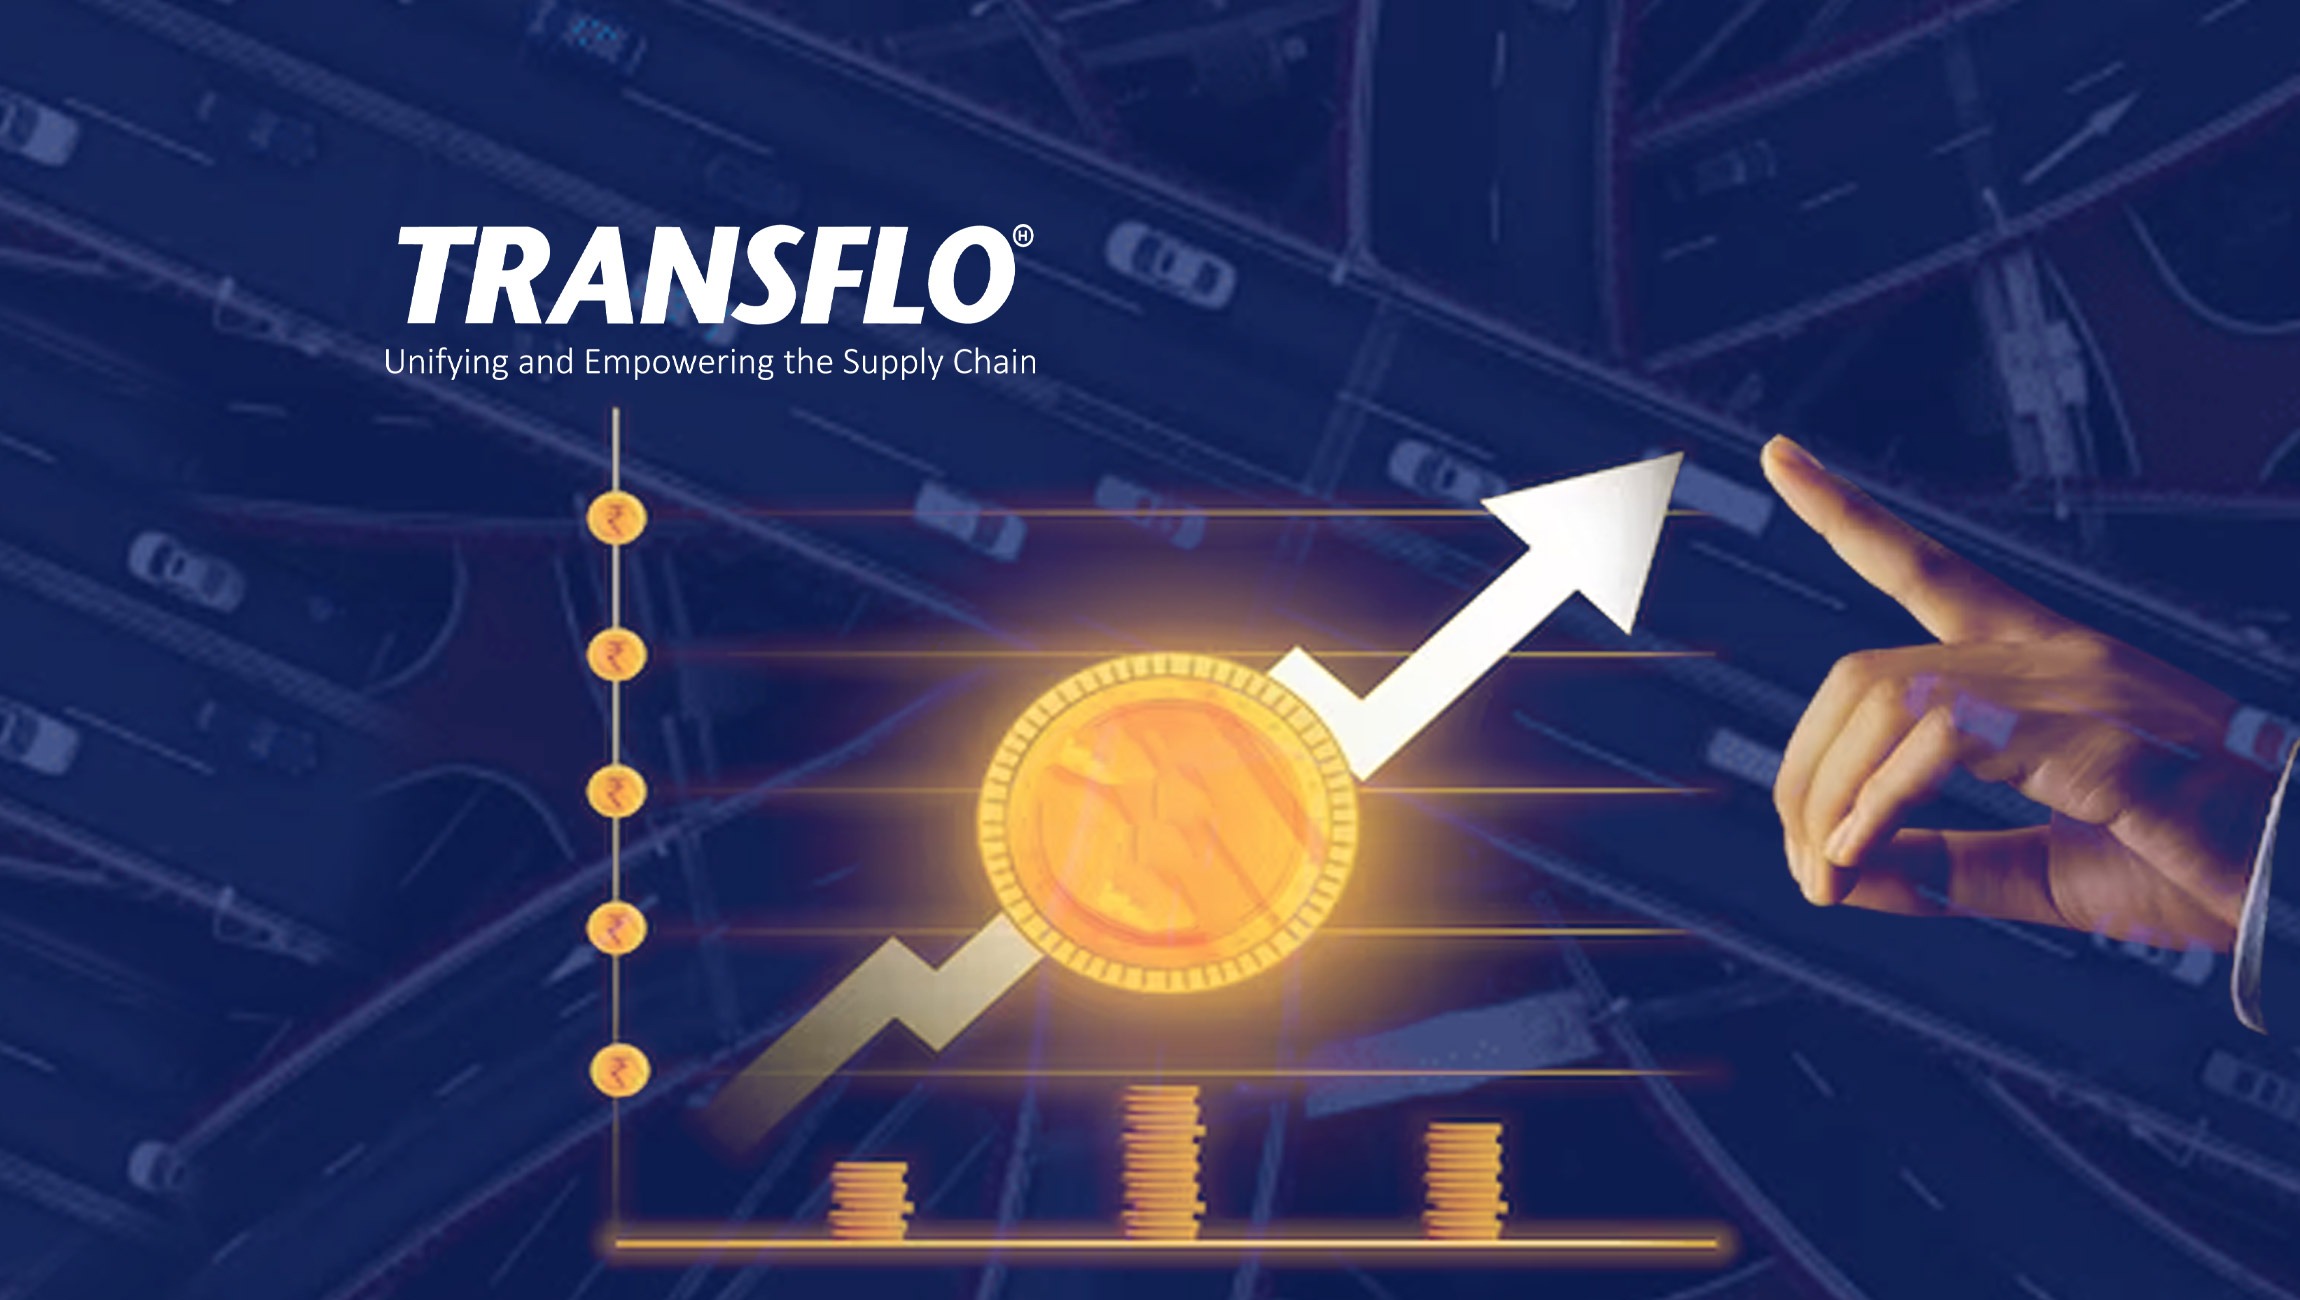 Logistics Software Leader Transflo Surpasses $100 Million in Revenue